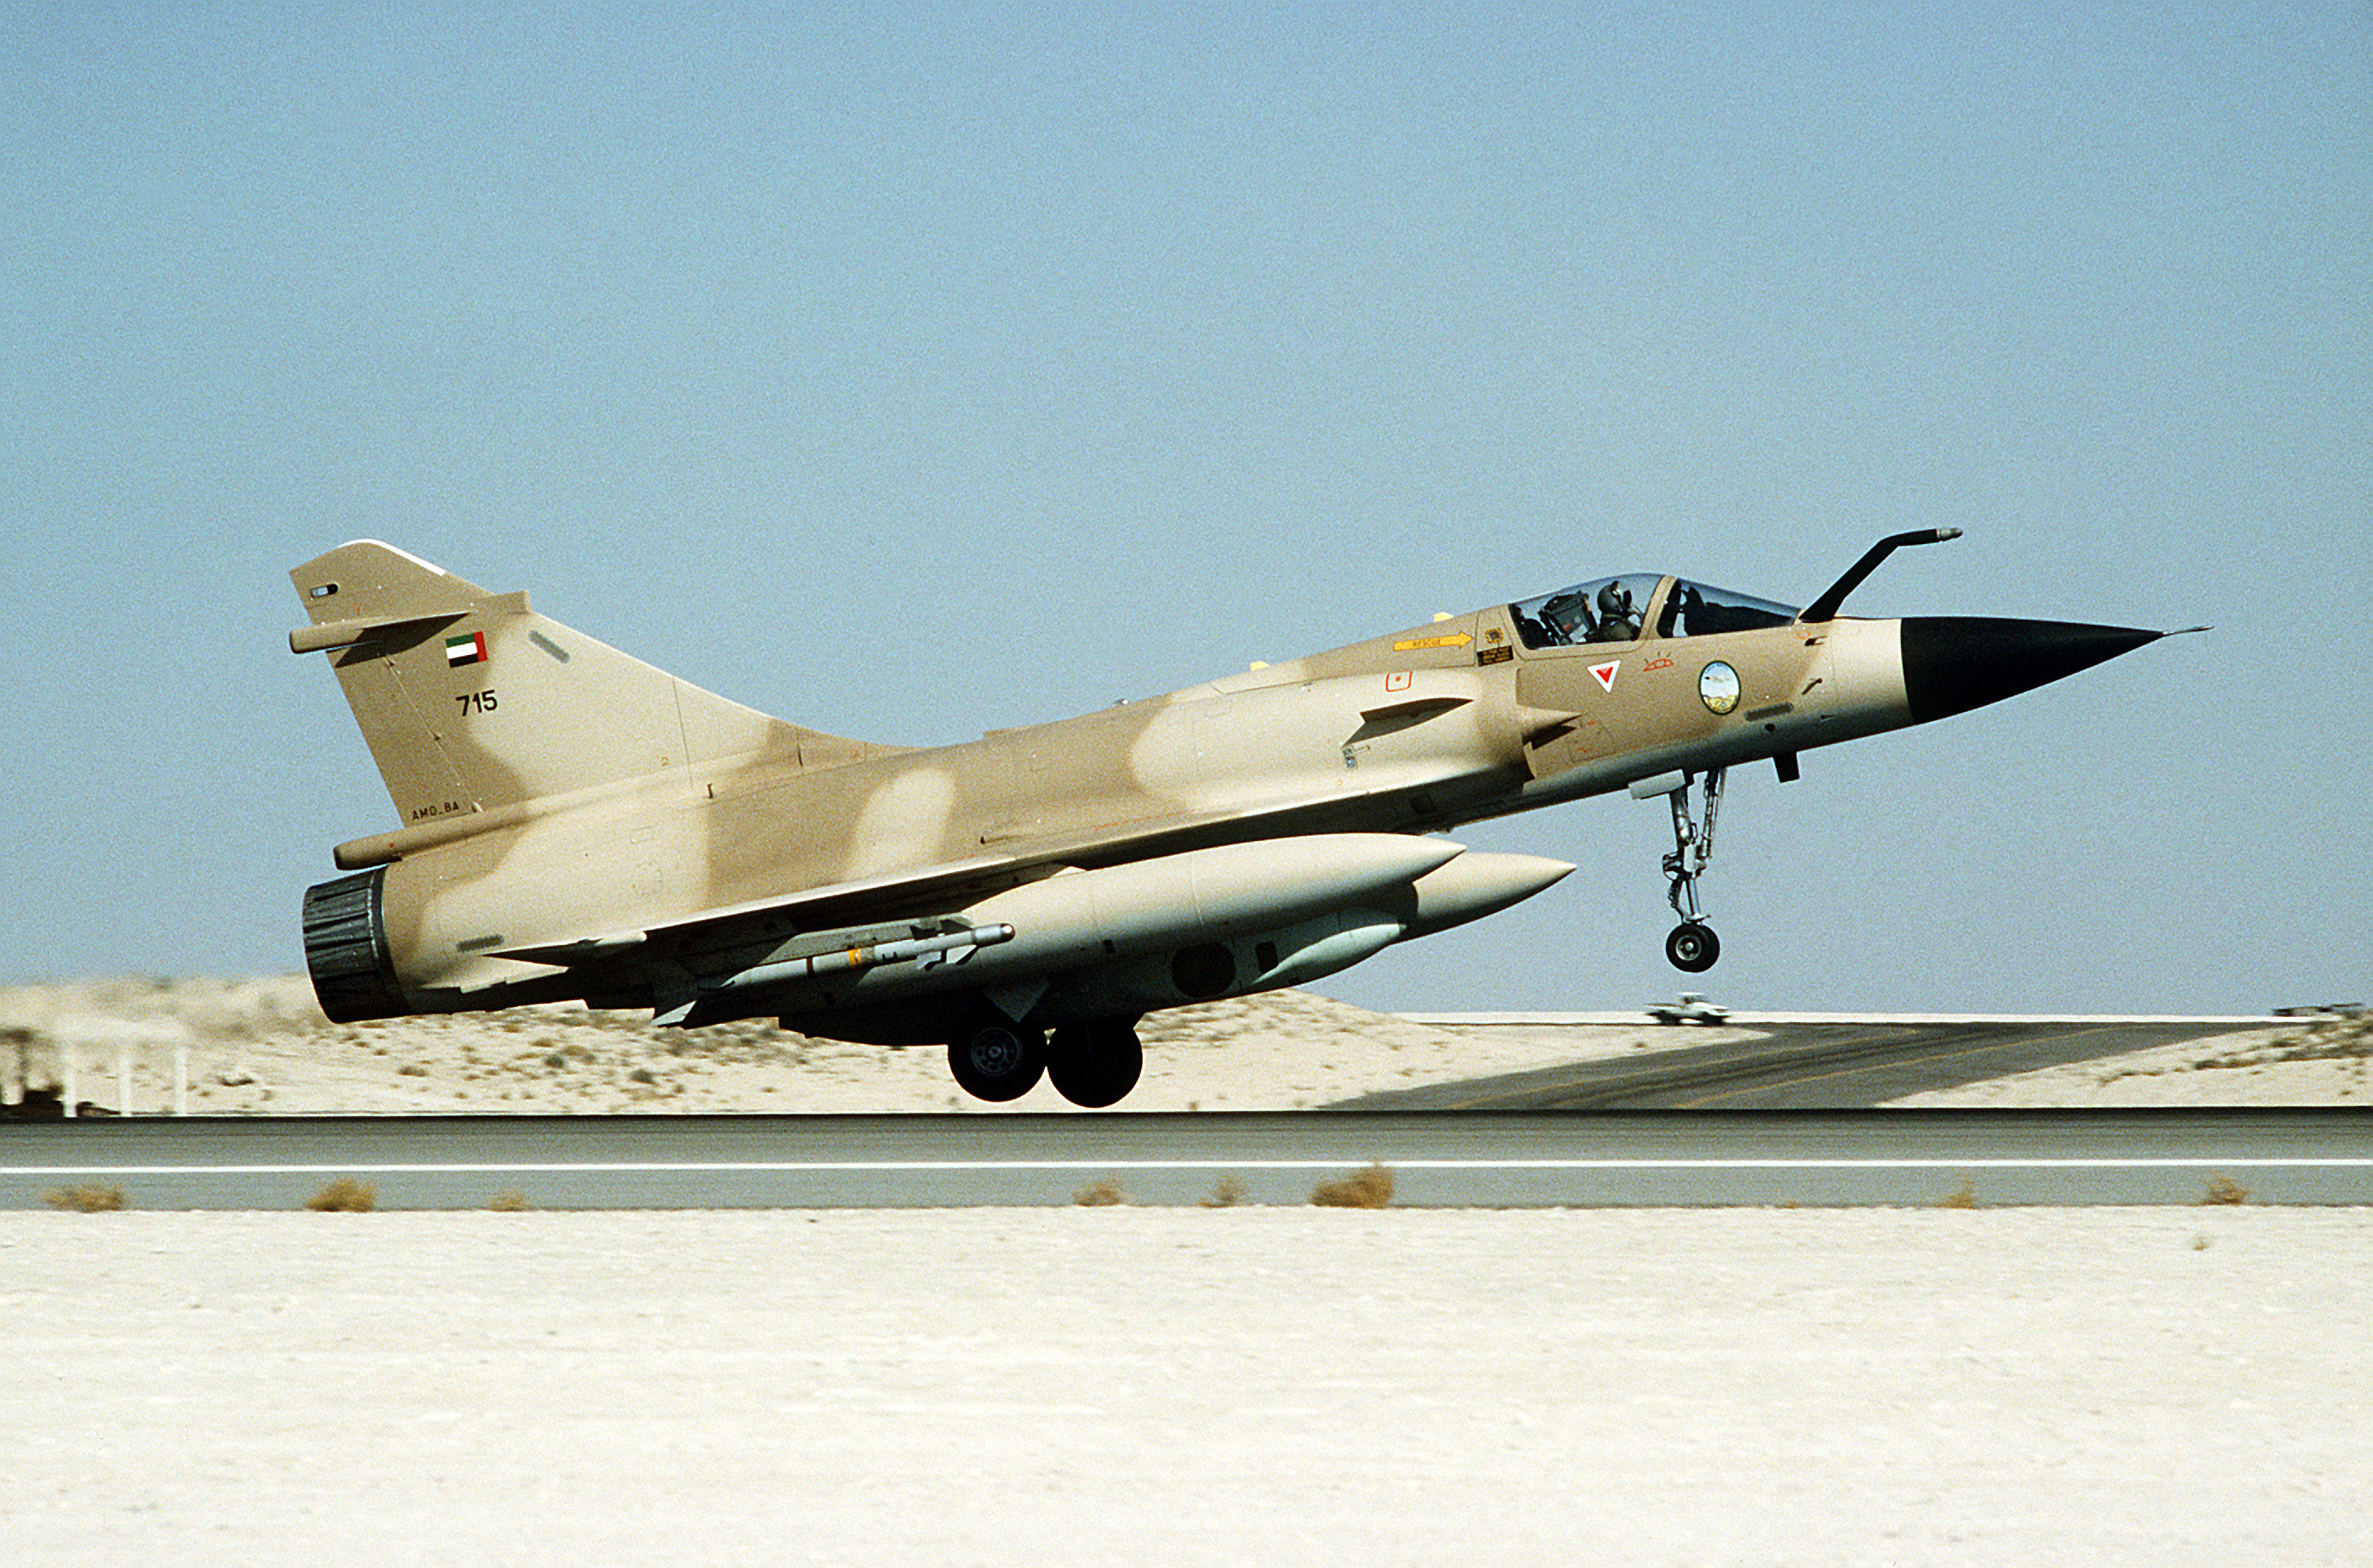 A_Kuwaiti_Mirage_2000C_fighter_aircraft_during_Operation_Desert_Storm.JPEG